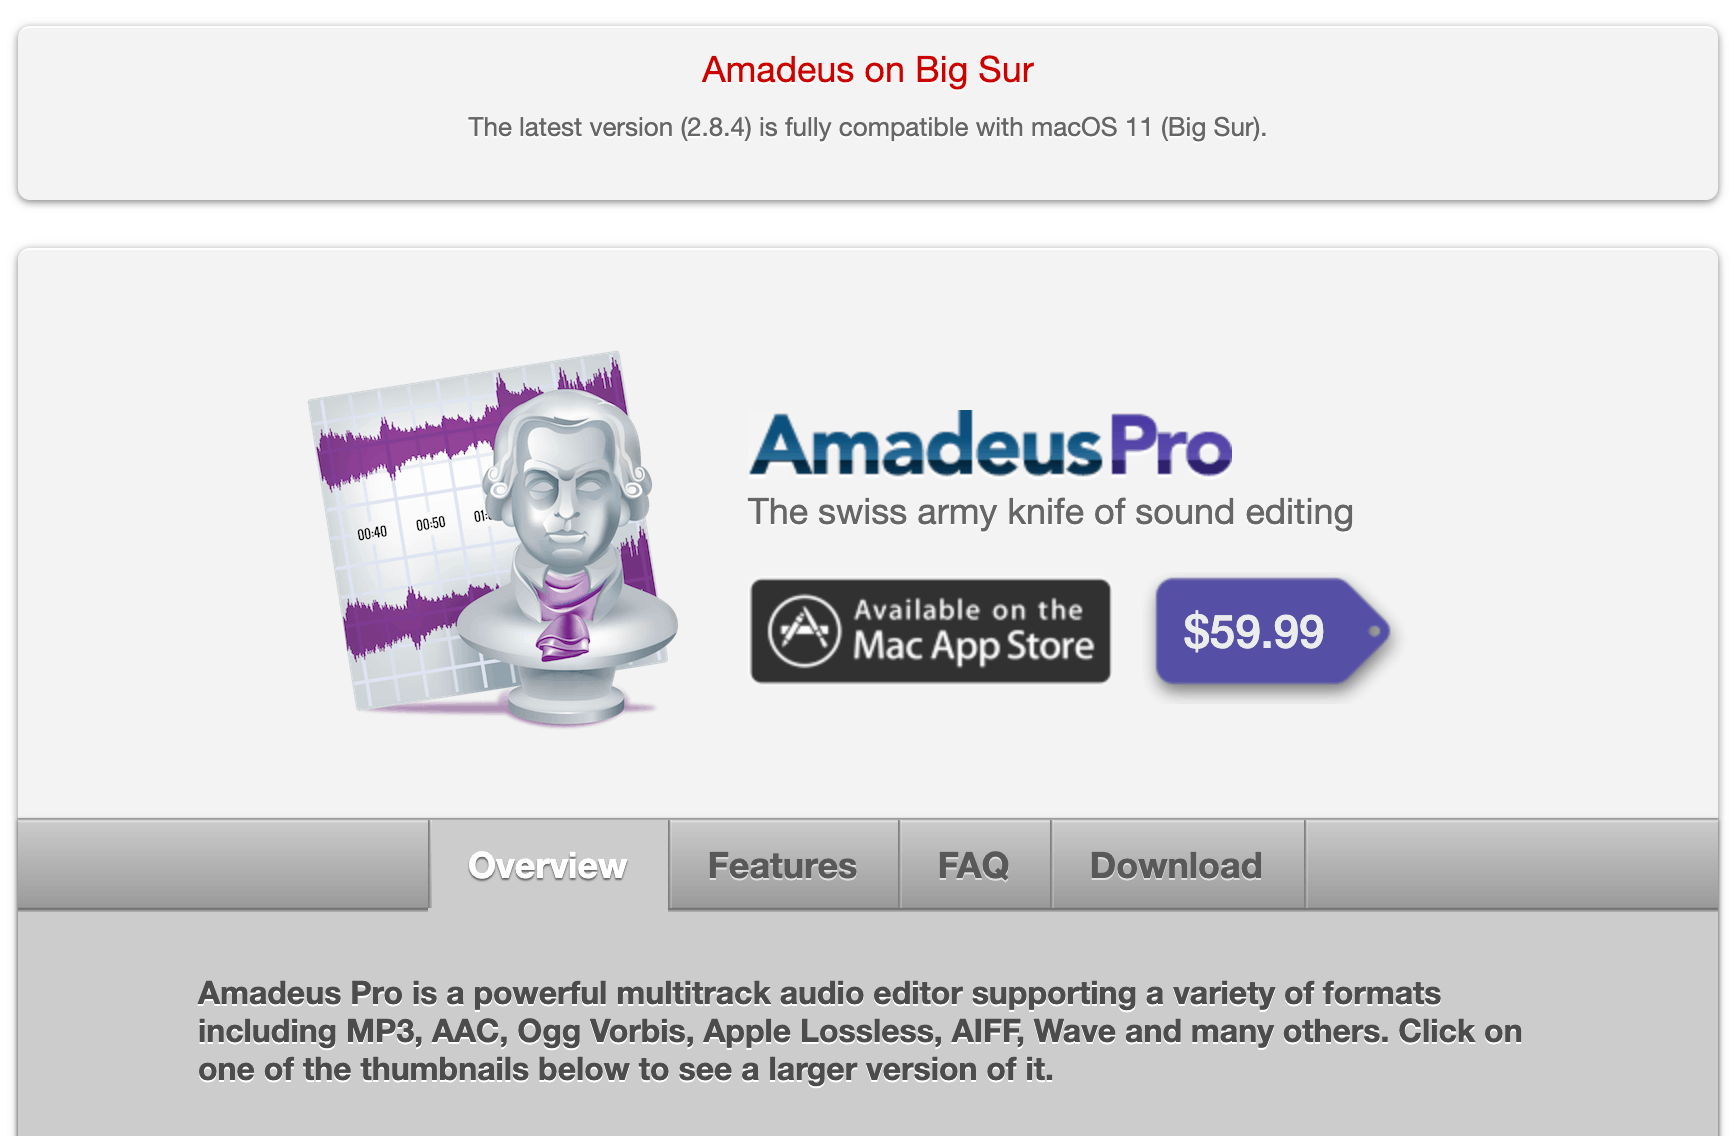 Best audio editing software - Amadeus Pro